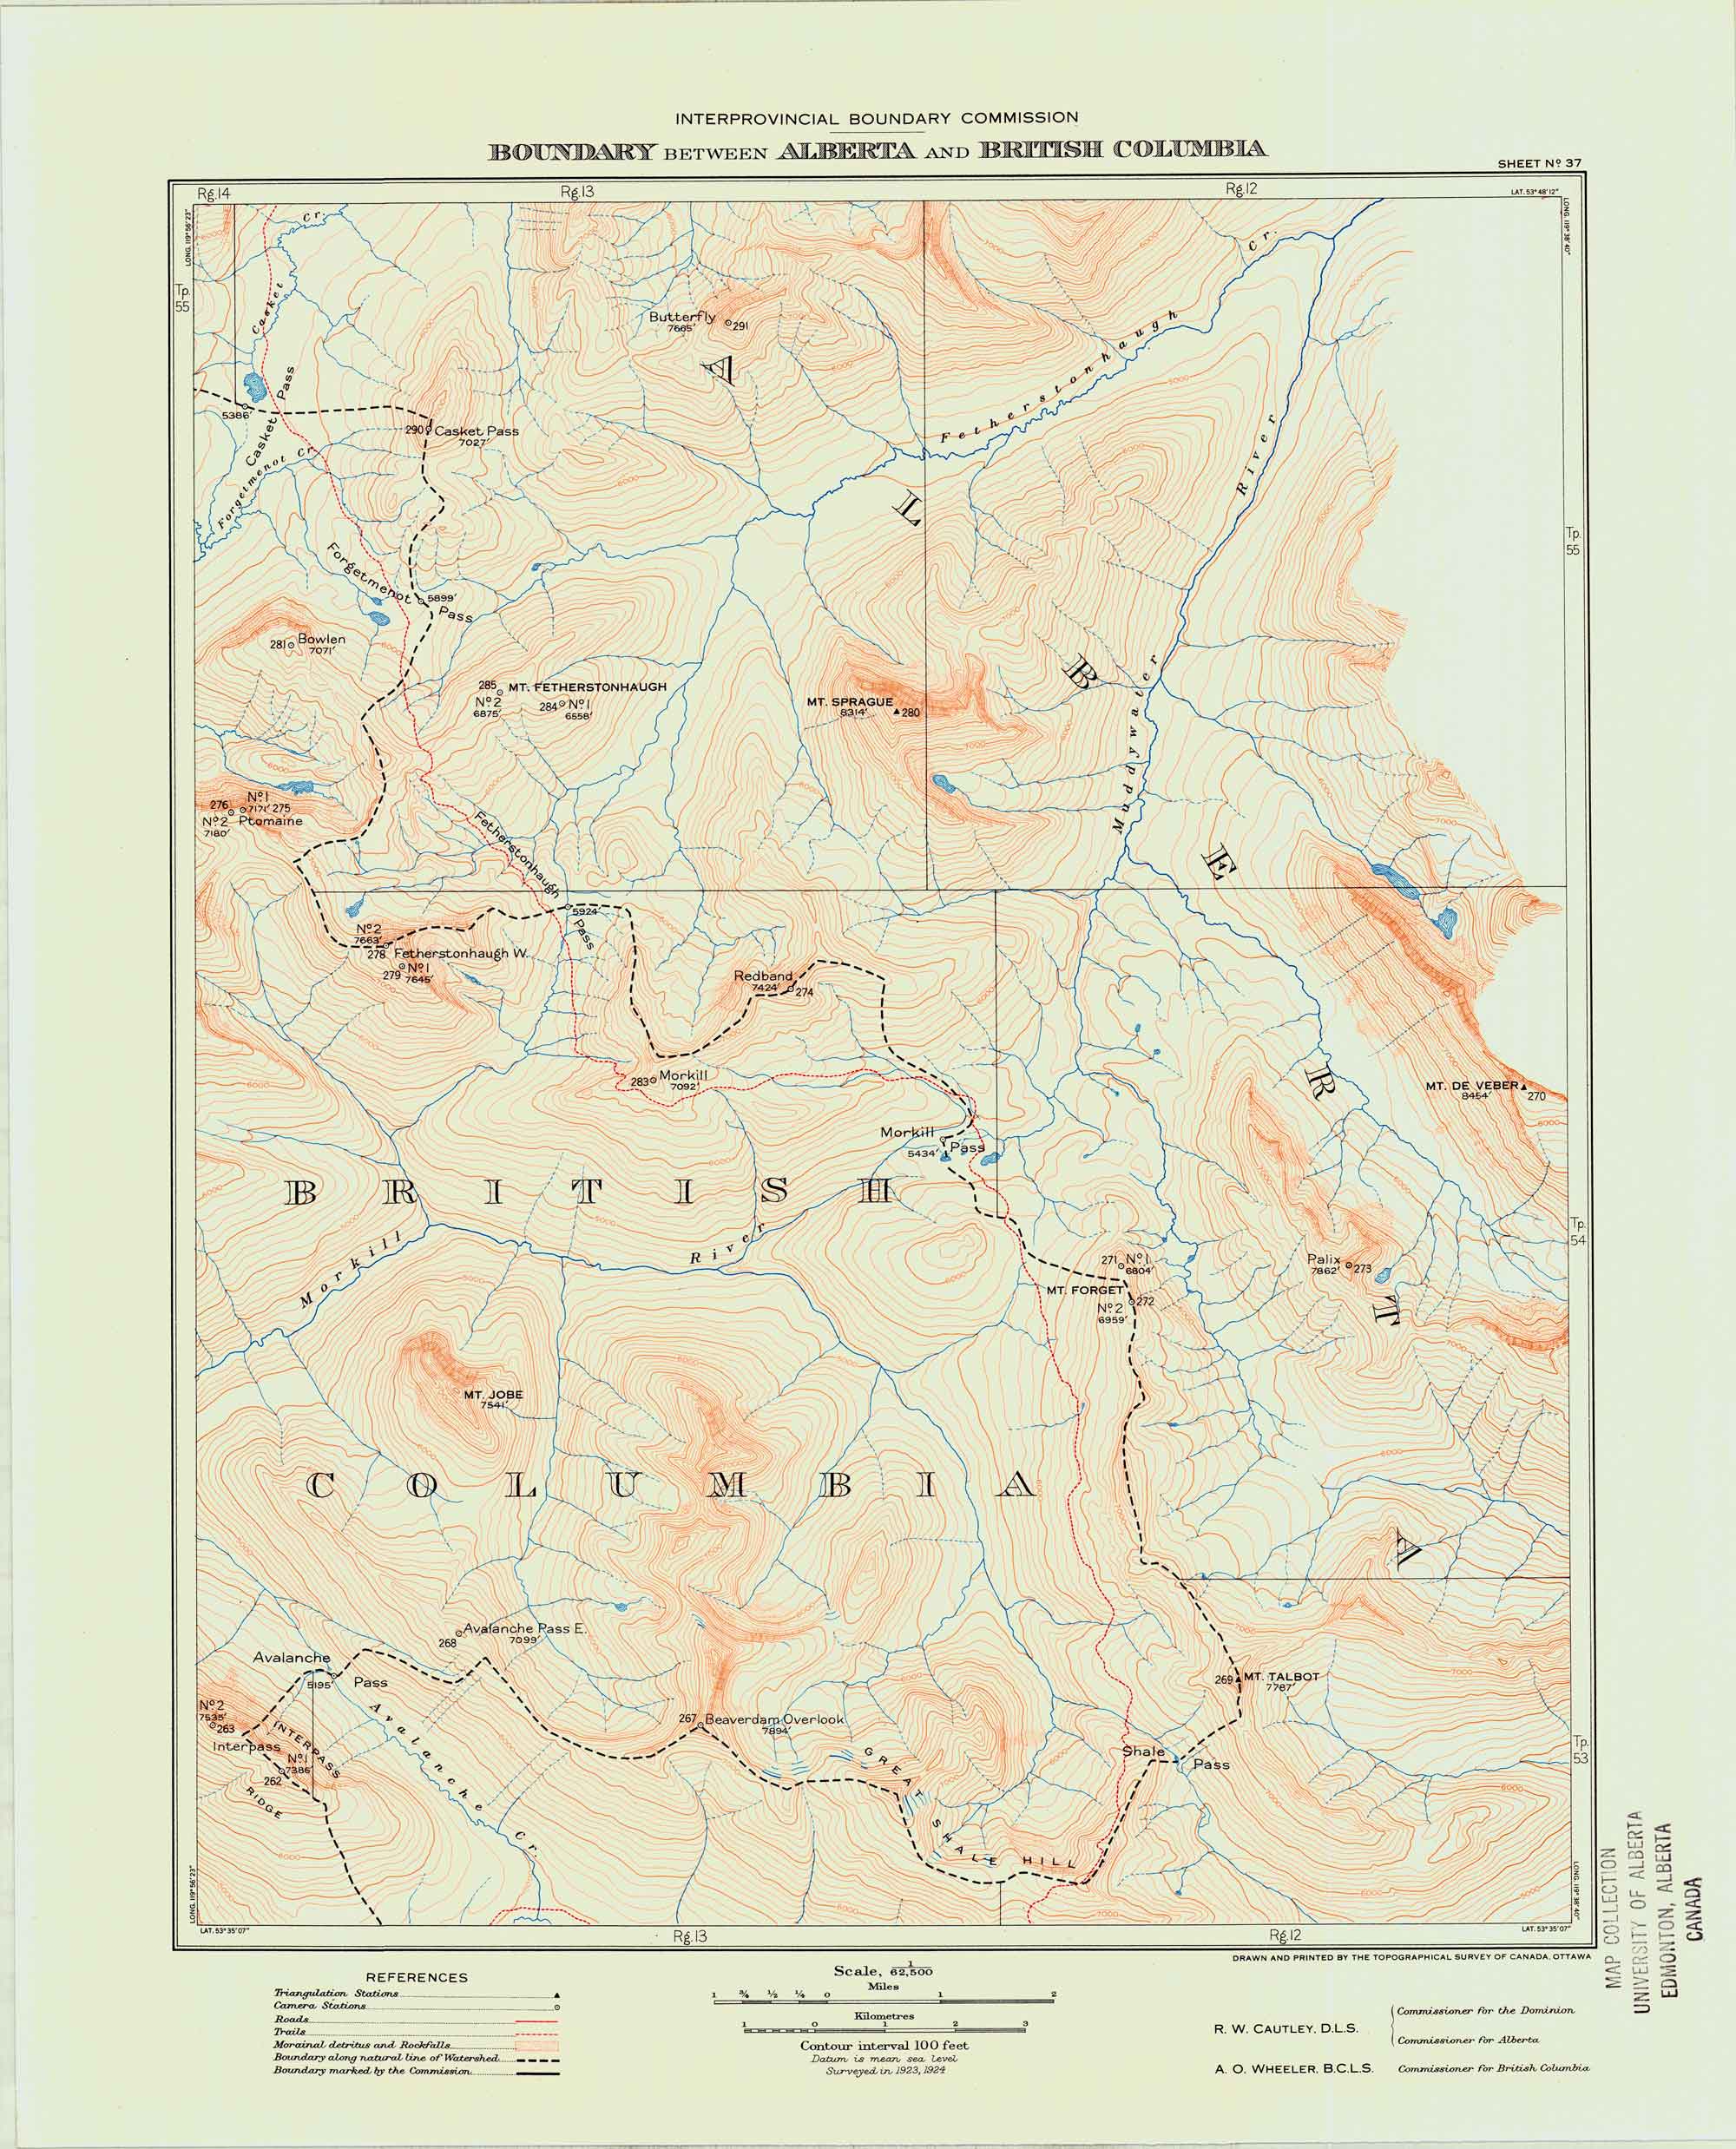 Boundary between Alberta and British Columbia. Office of the Surveyor-General, 1924